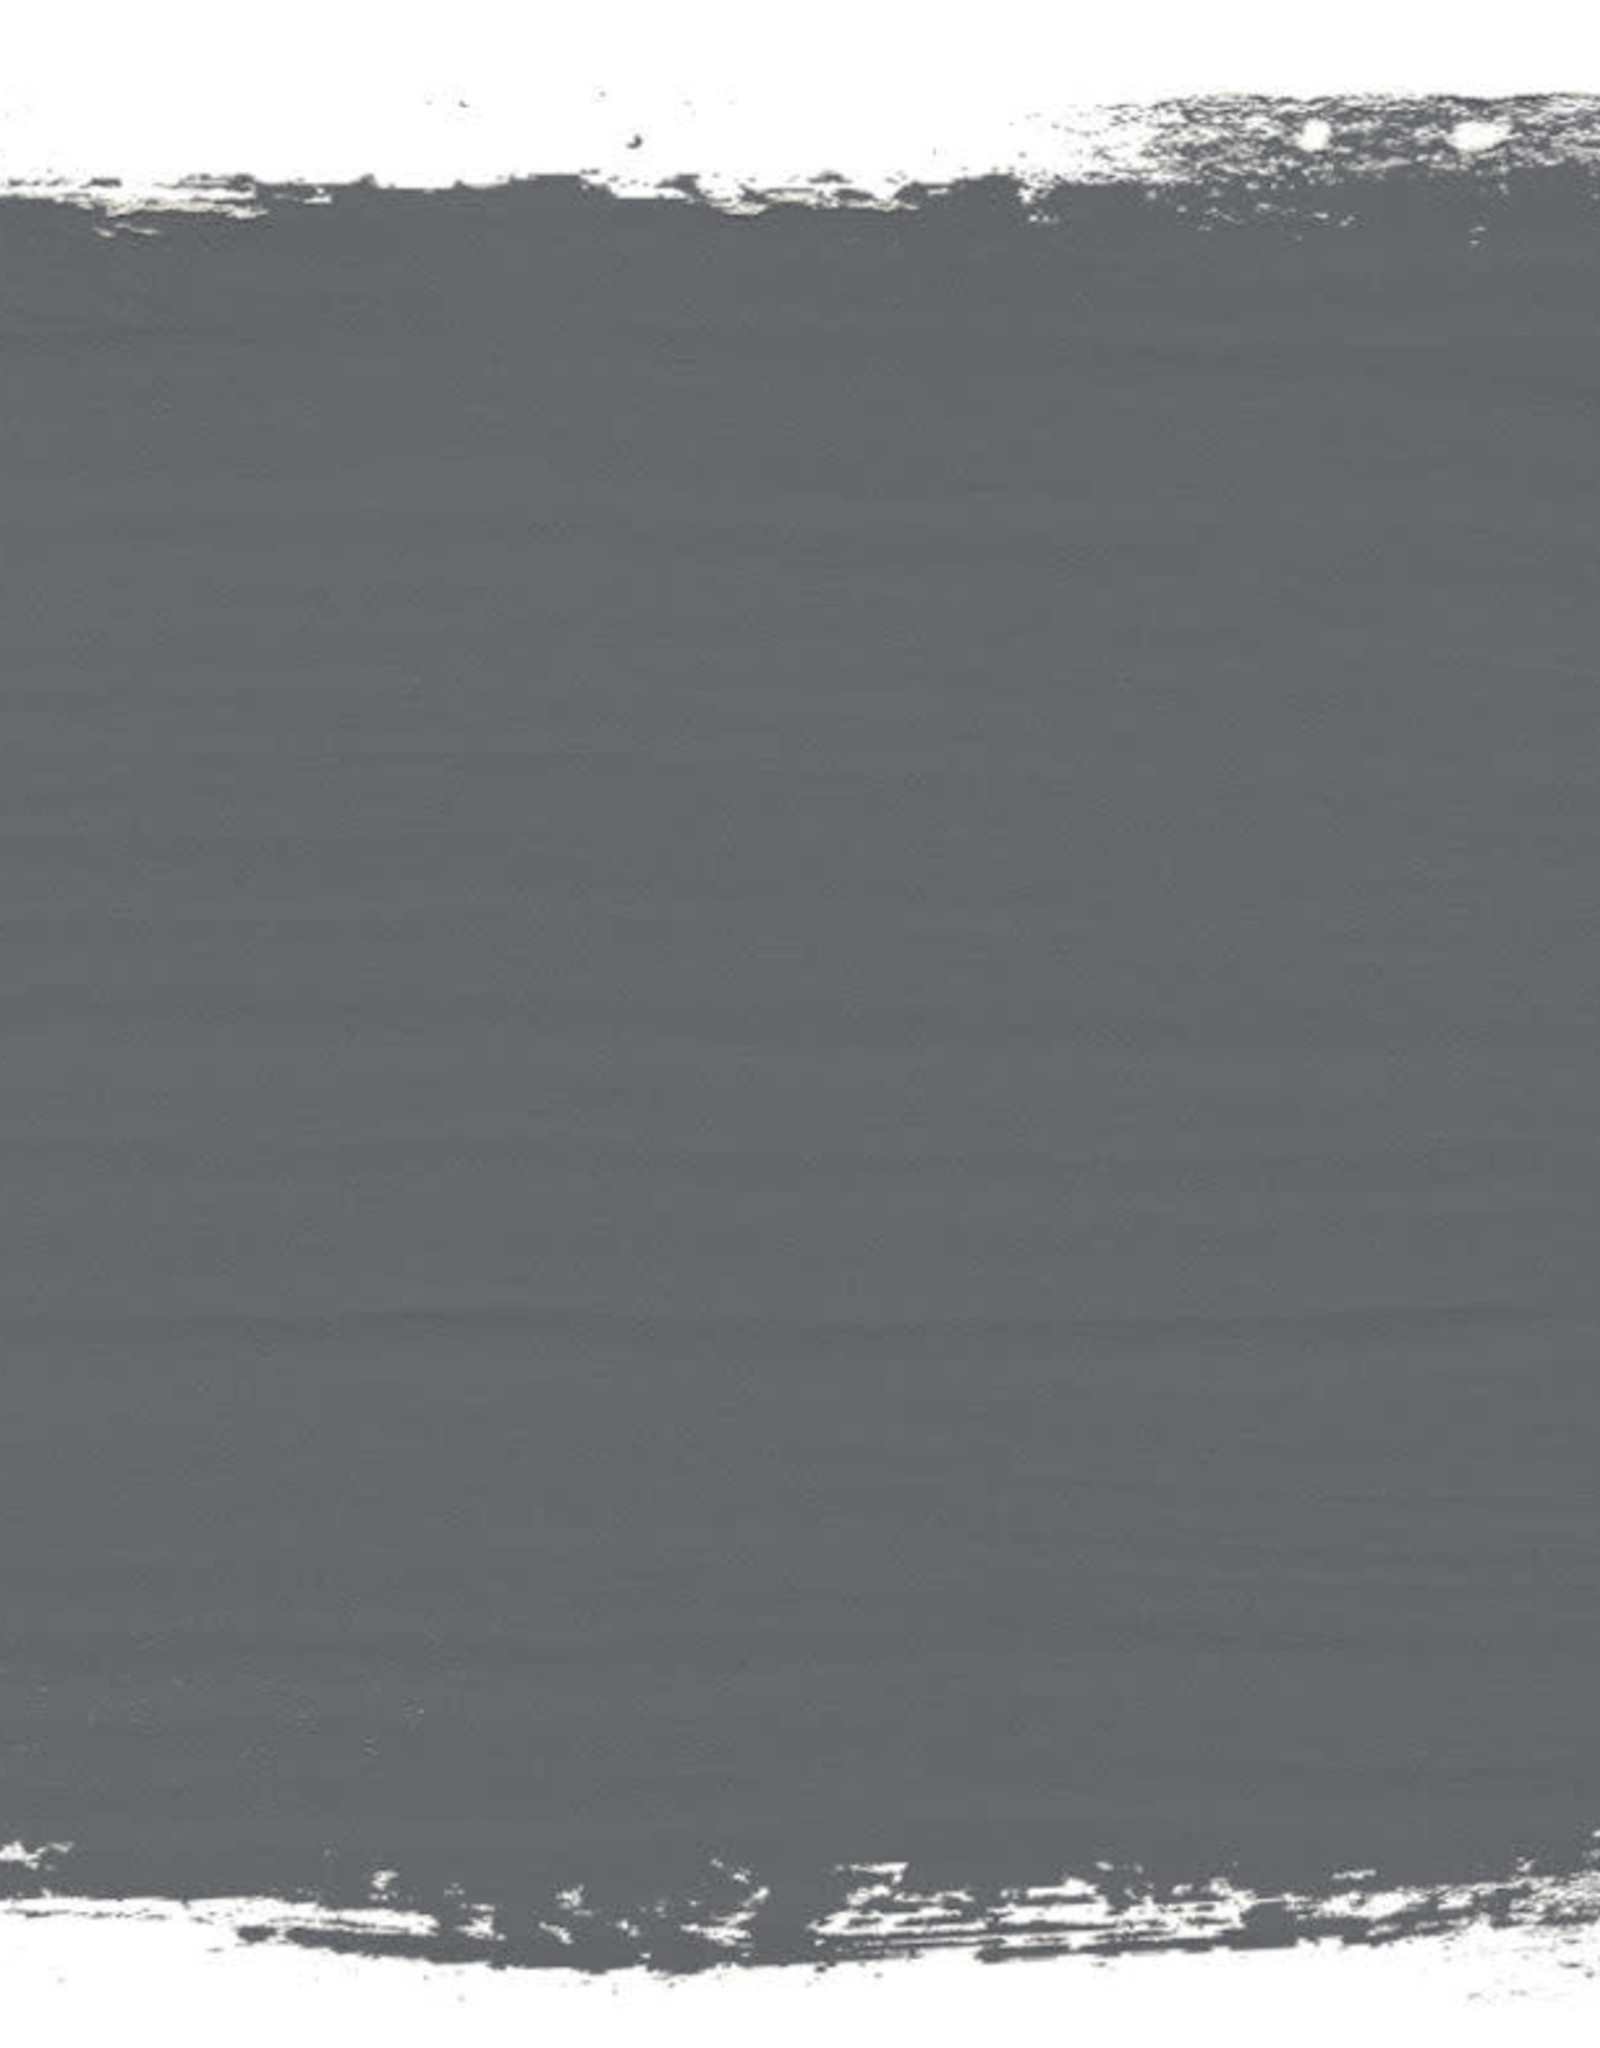 Annie Sloan Whistler Grey 1L Chalk Paint® by Annie Sloan